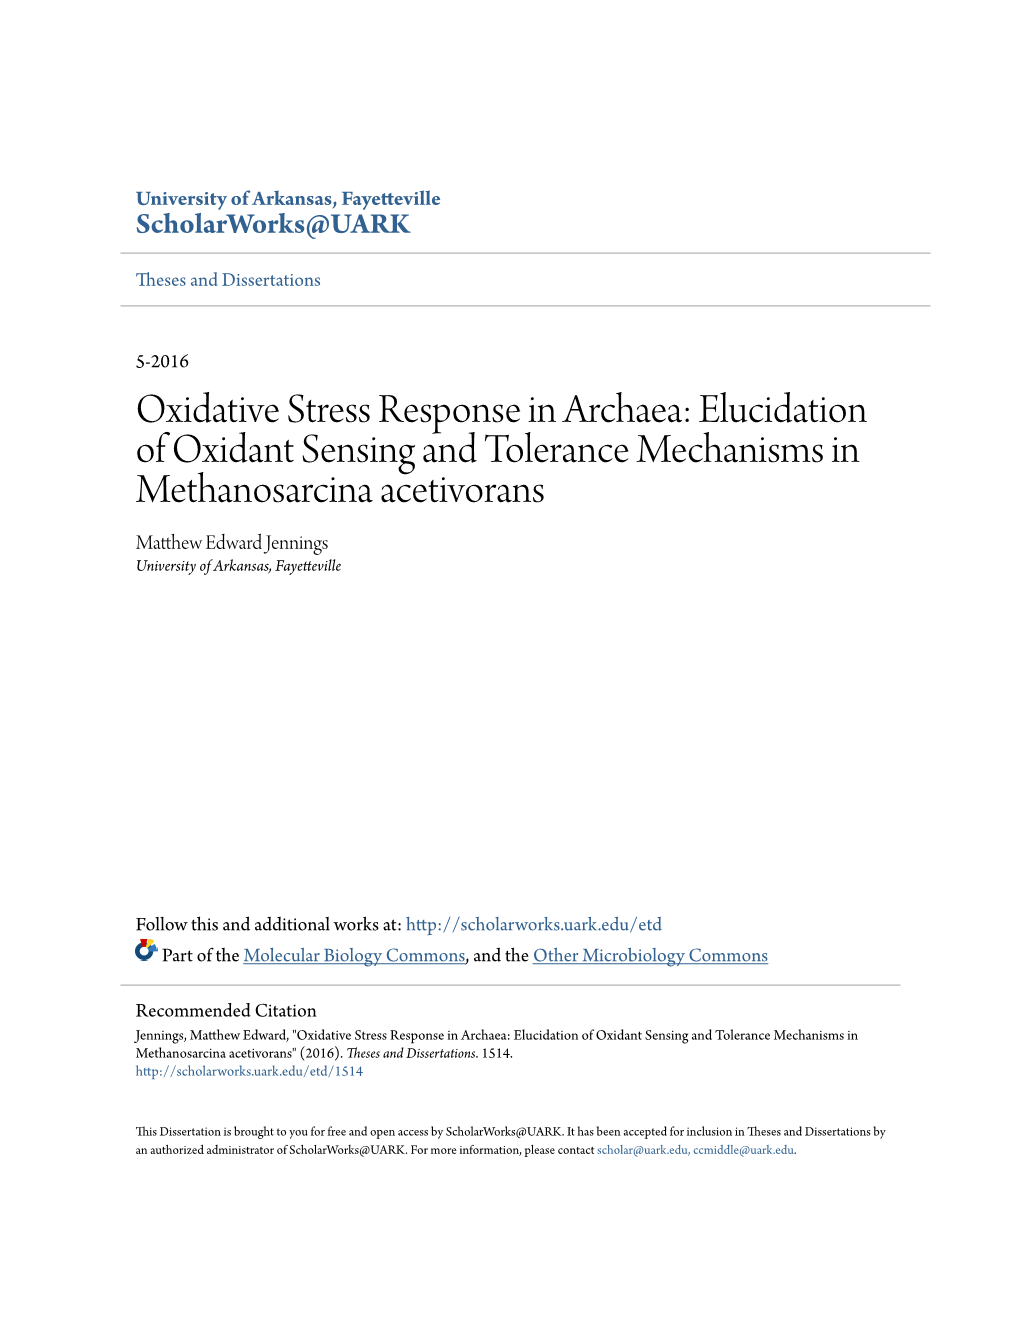 Oxidative Stress Response in Archaea: Elucidation of Oxidant Sensing